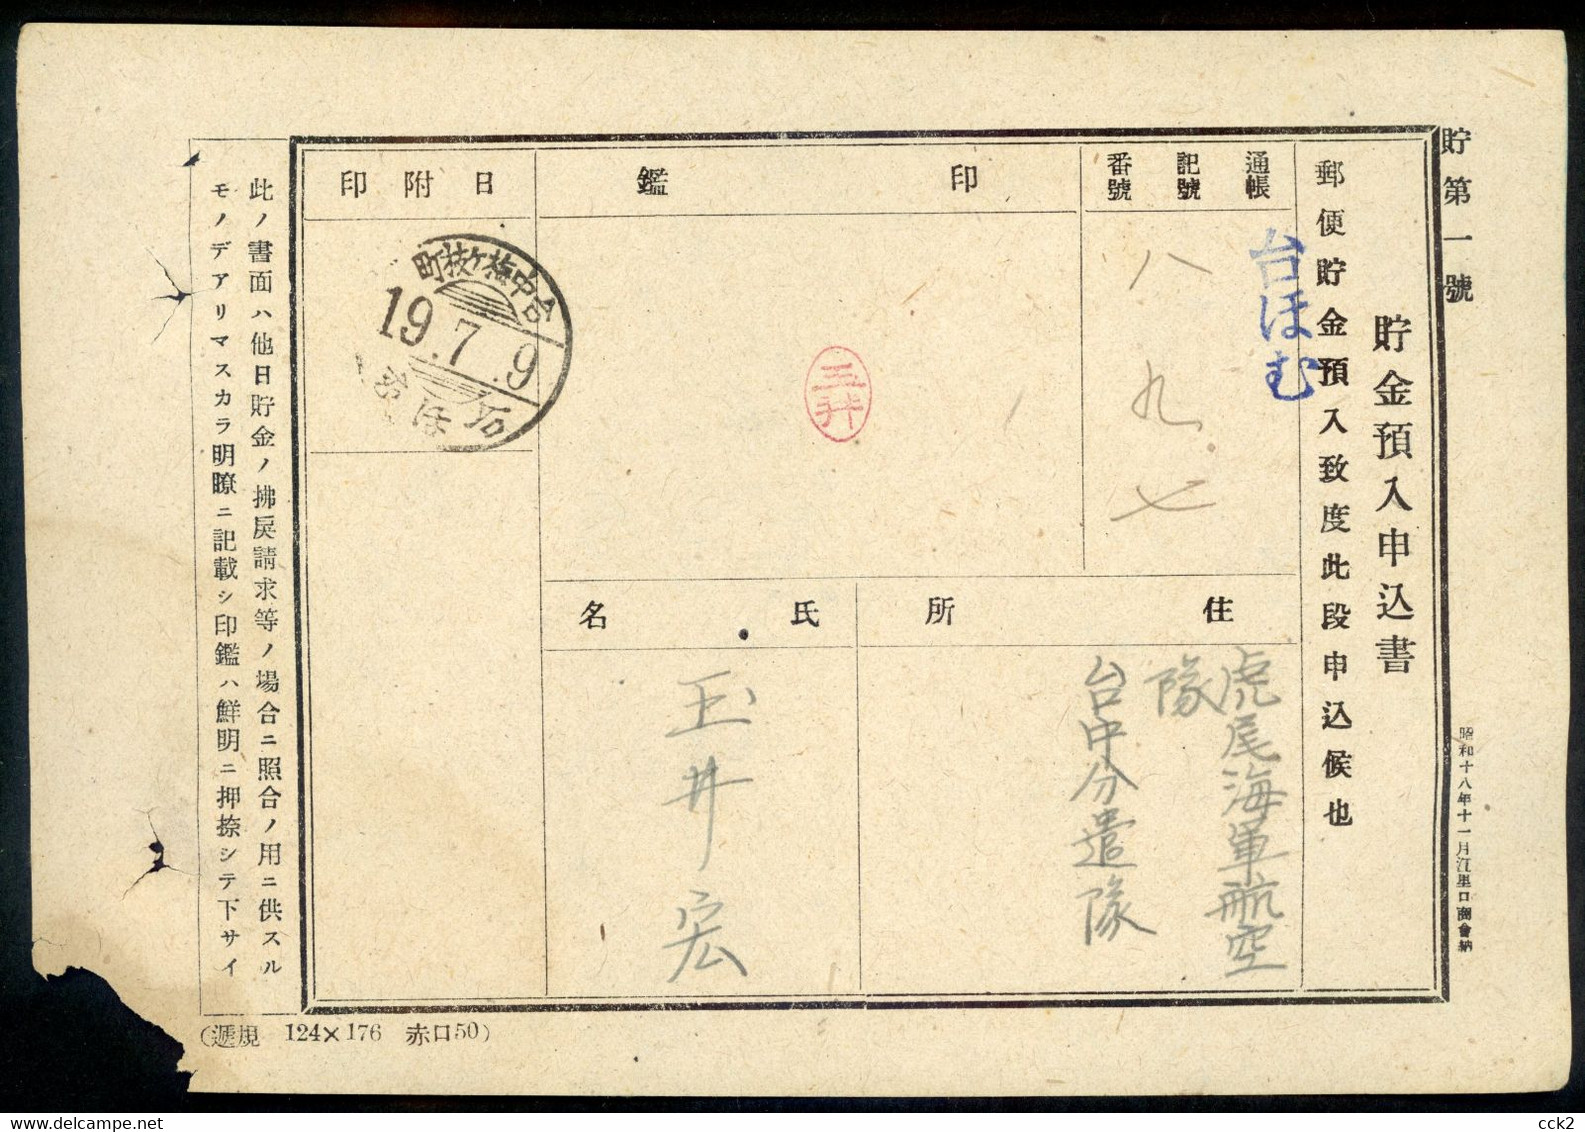 JAPAN OCCUPATION TAIWAN- Postal Convenience Savings Fund Advance Deposit Application Form (1) - 1945 Japanse Bezetting